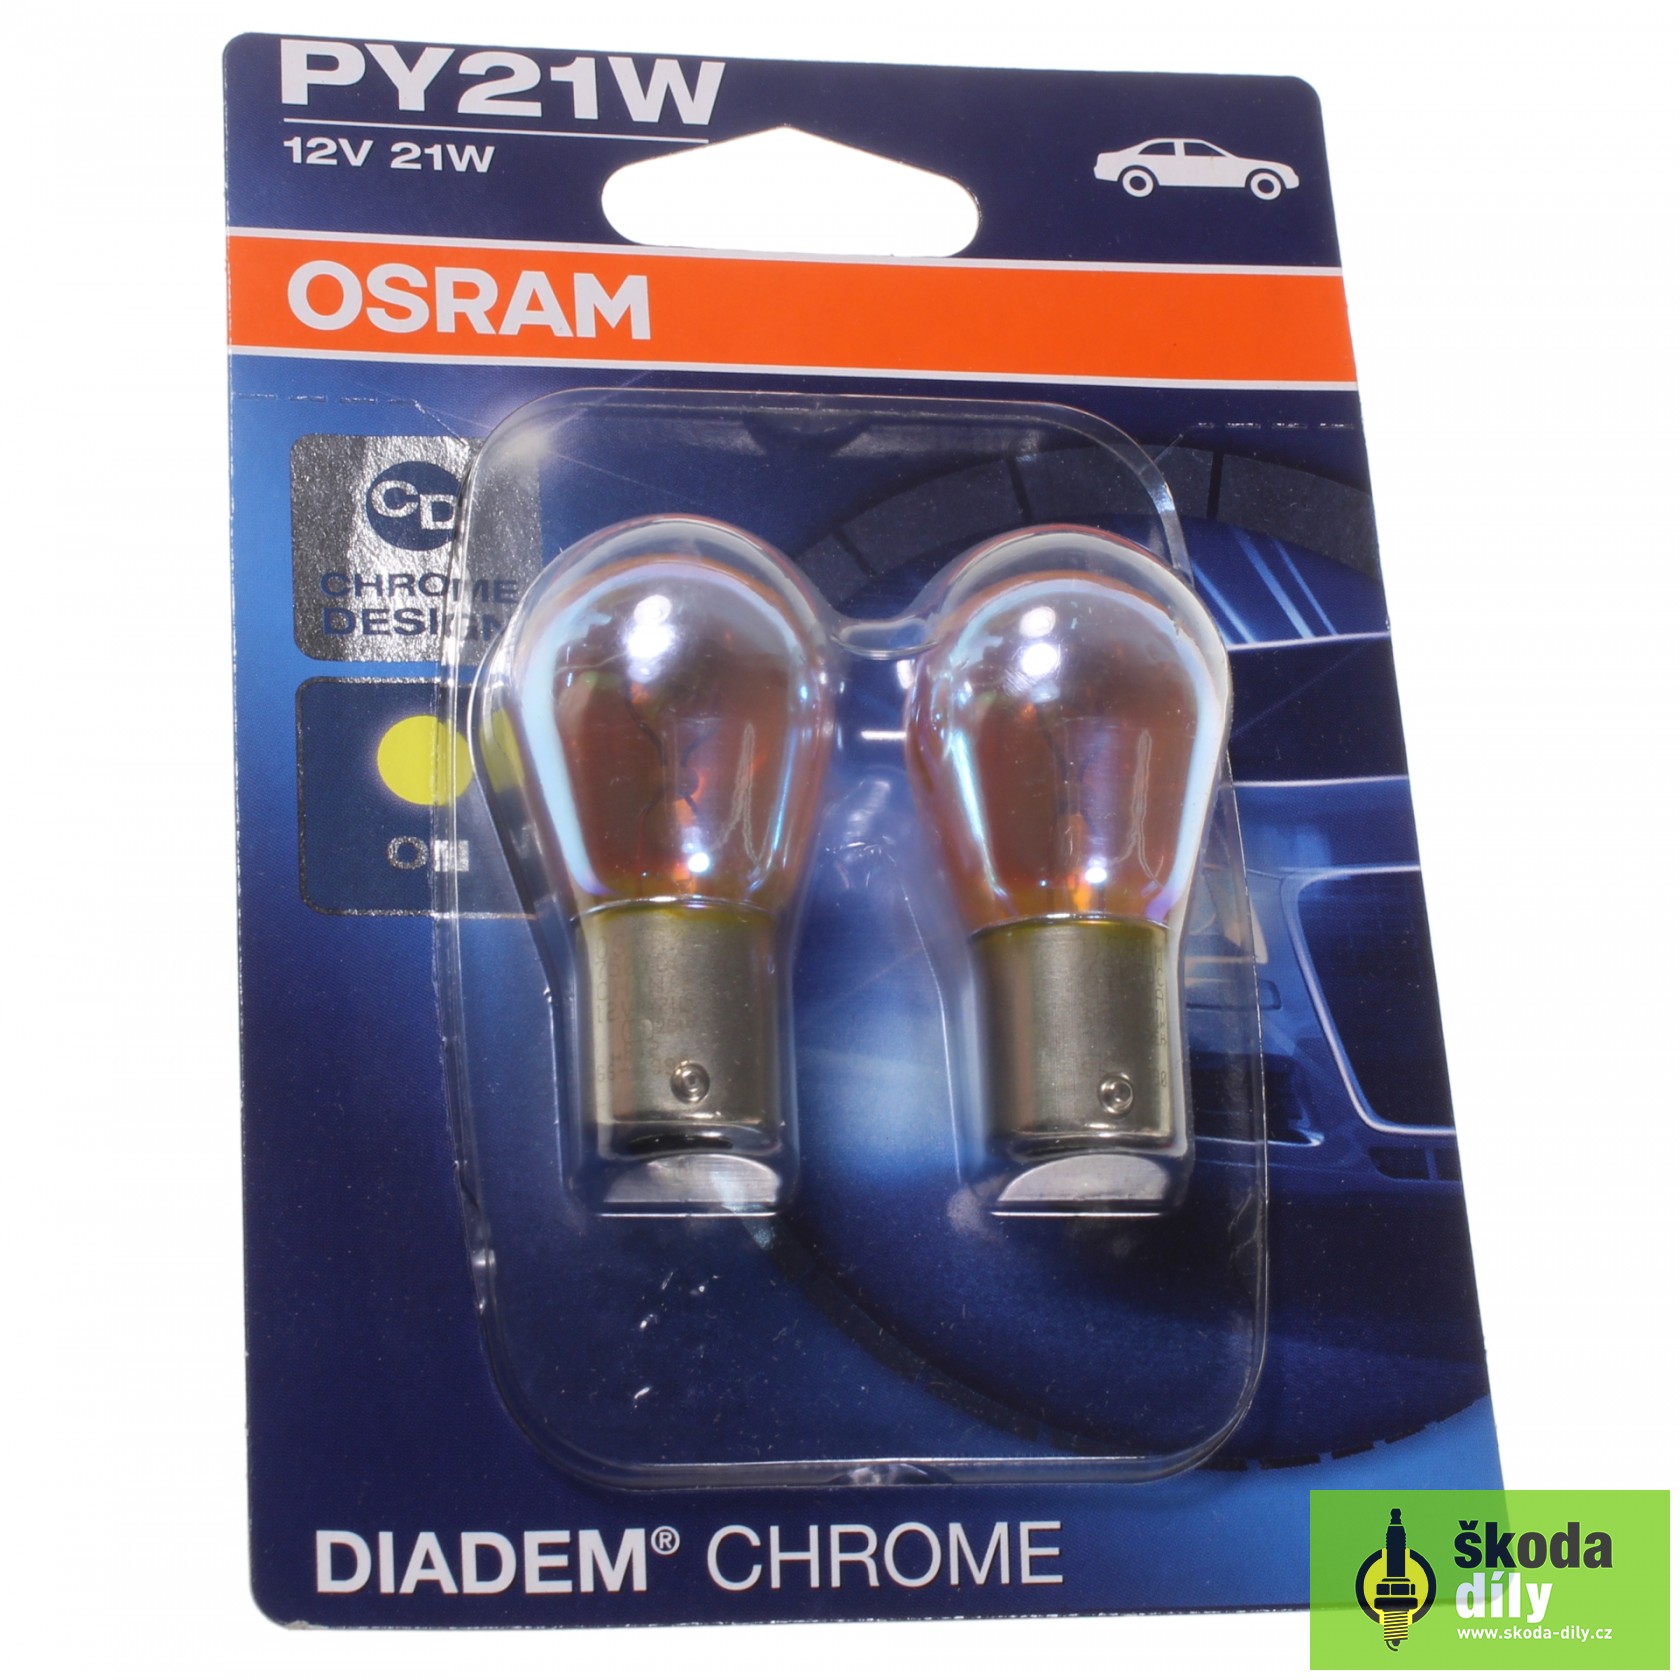 OSRAM® Blinkerbirne PY21W 12V 21W BAU15s Diadem Chrome Blister